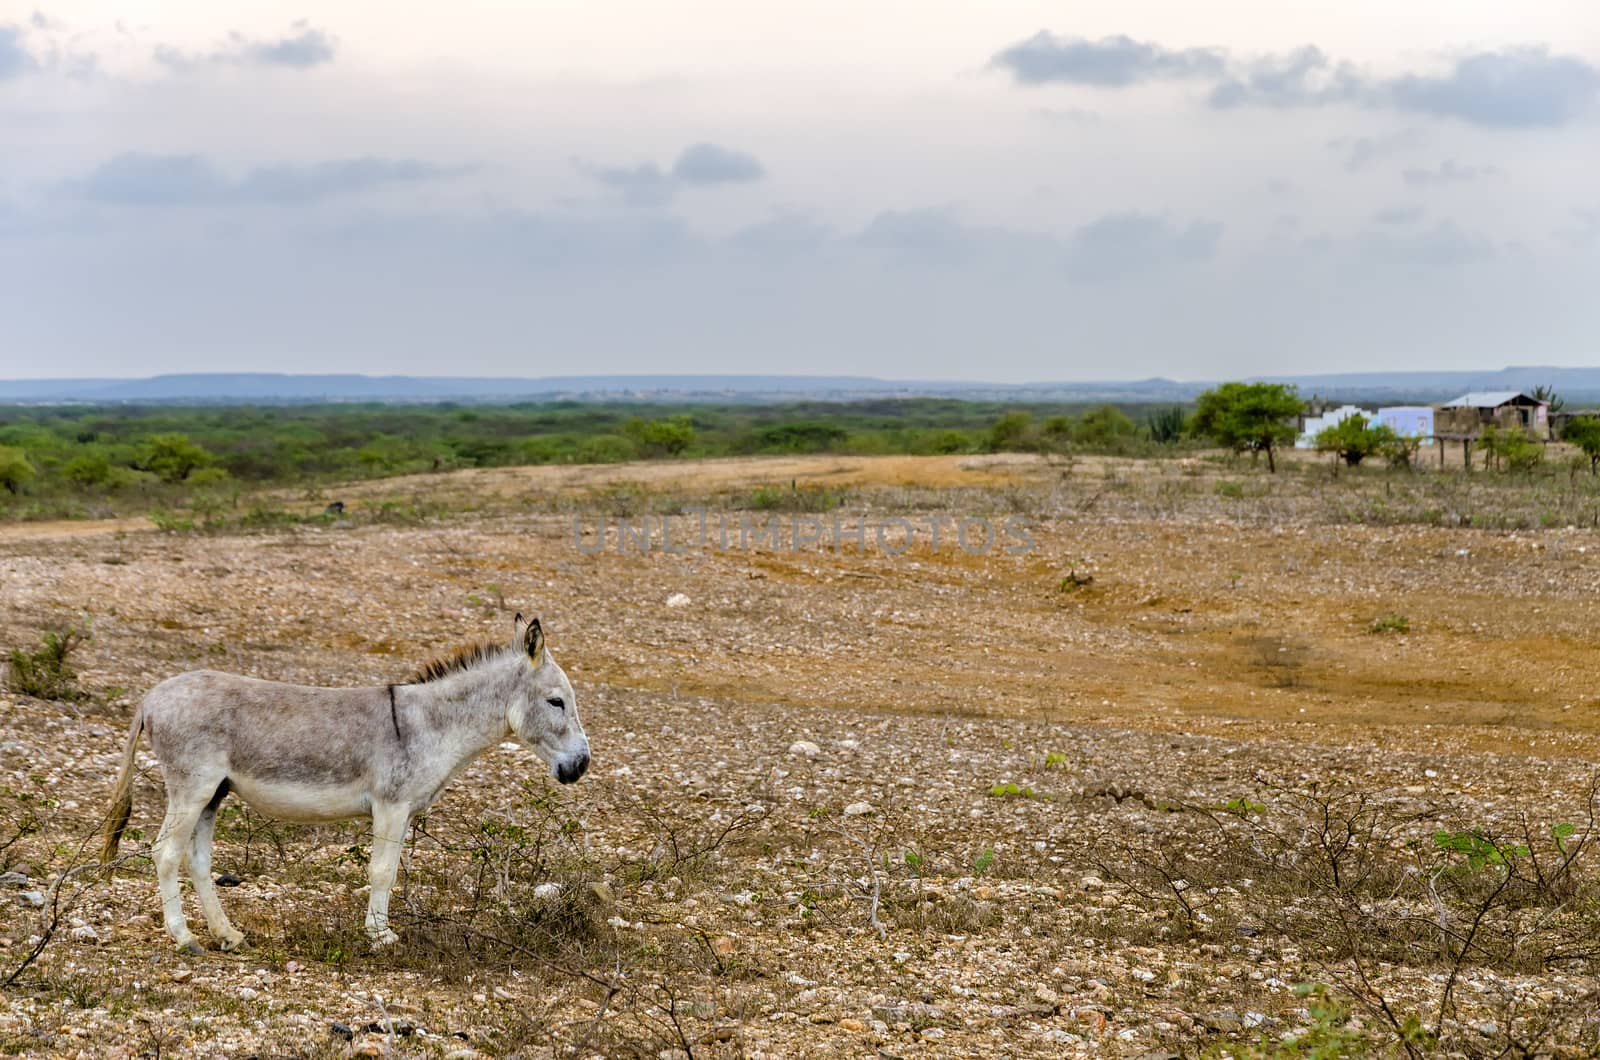 A grey donkey in a dry barren landscape